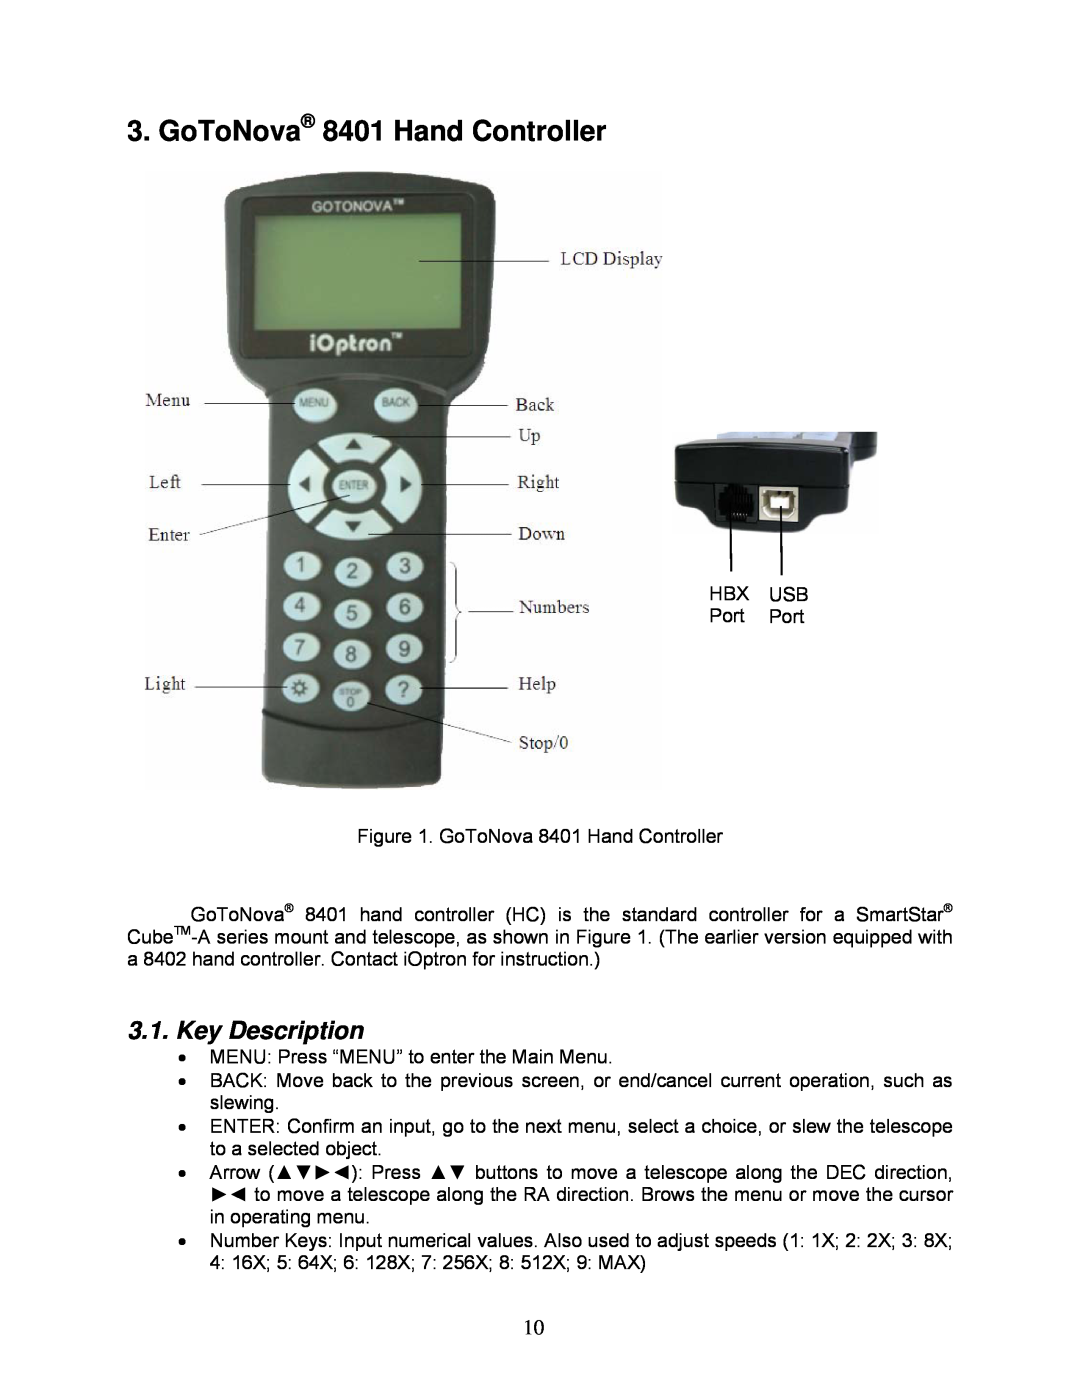 iOptron 8602, 8600, 8603 and 8604 instruction manual GoToNova 8401 Hand Controller, Key Description 